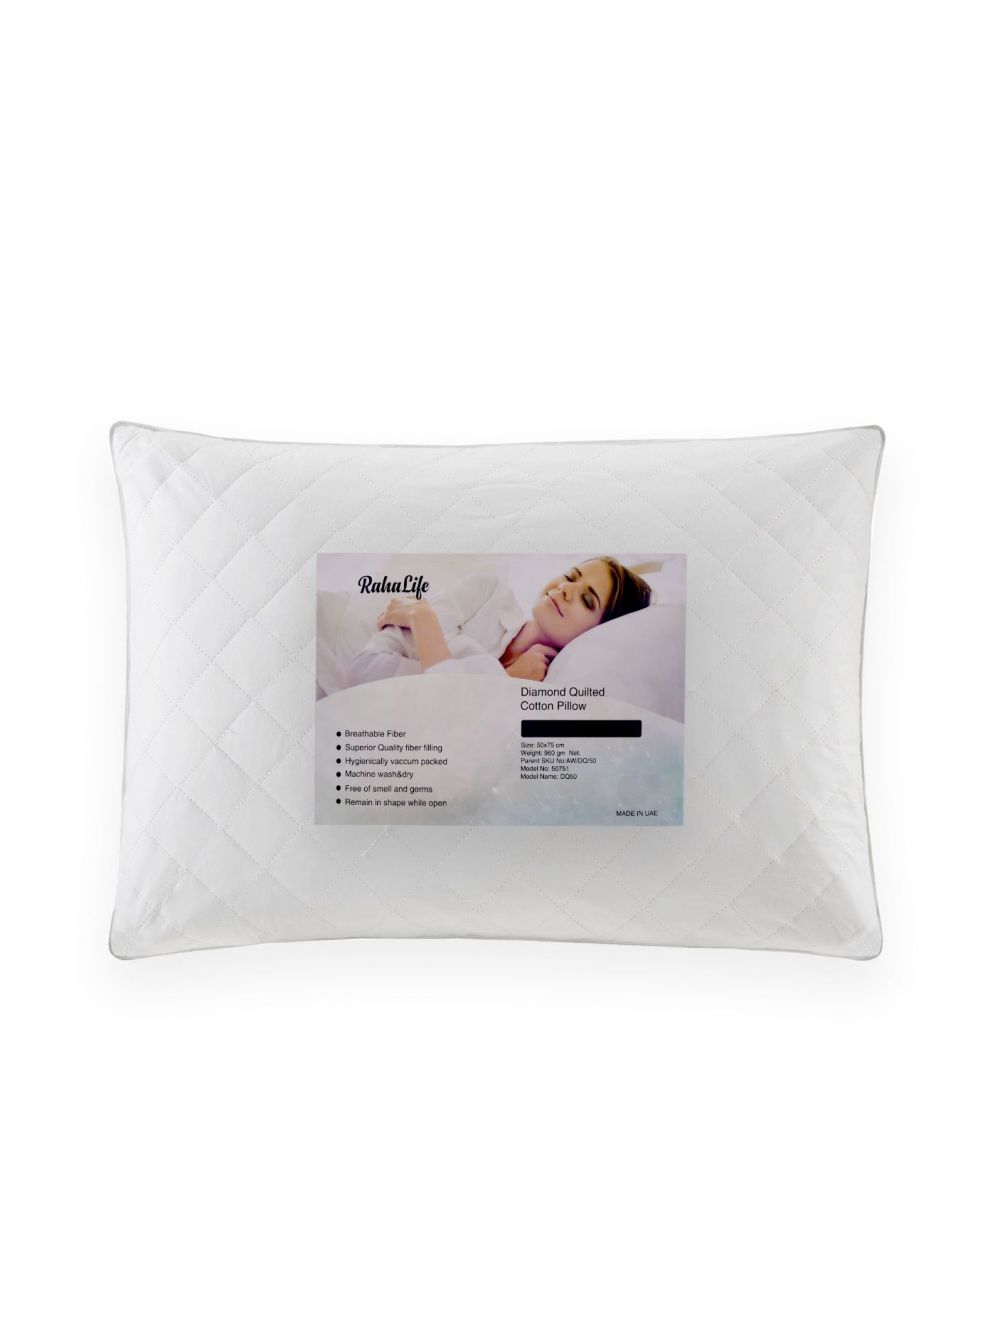 RahaLife Diamond Quilted Pillow Cotton White 50x75 CM-AW/DQ/50